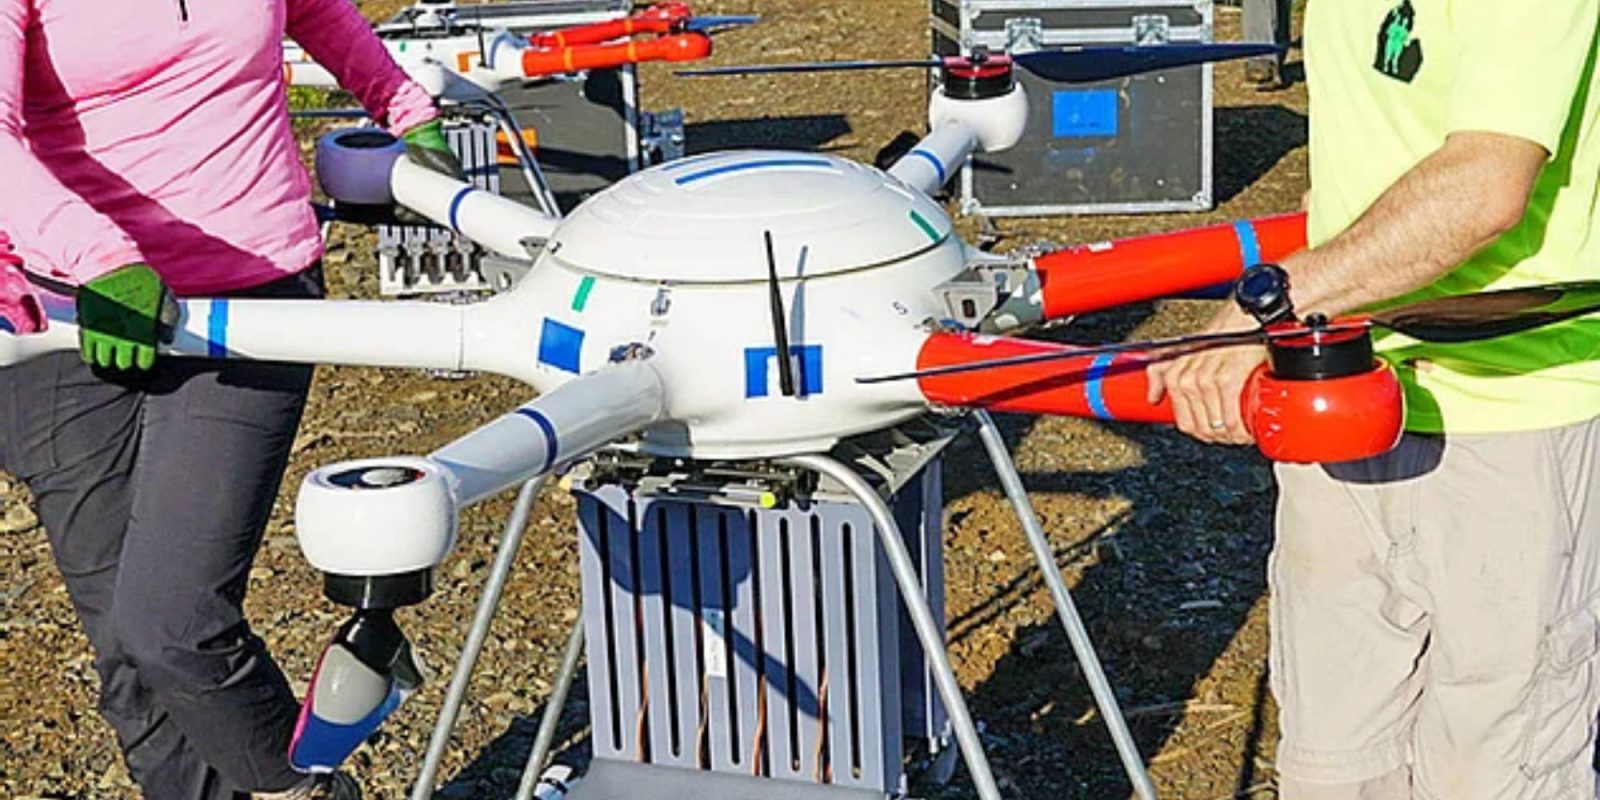 DroneSeed BVLOS reforesting drone fleet